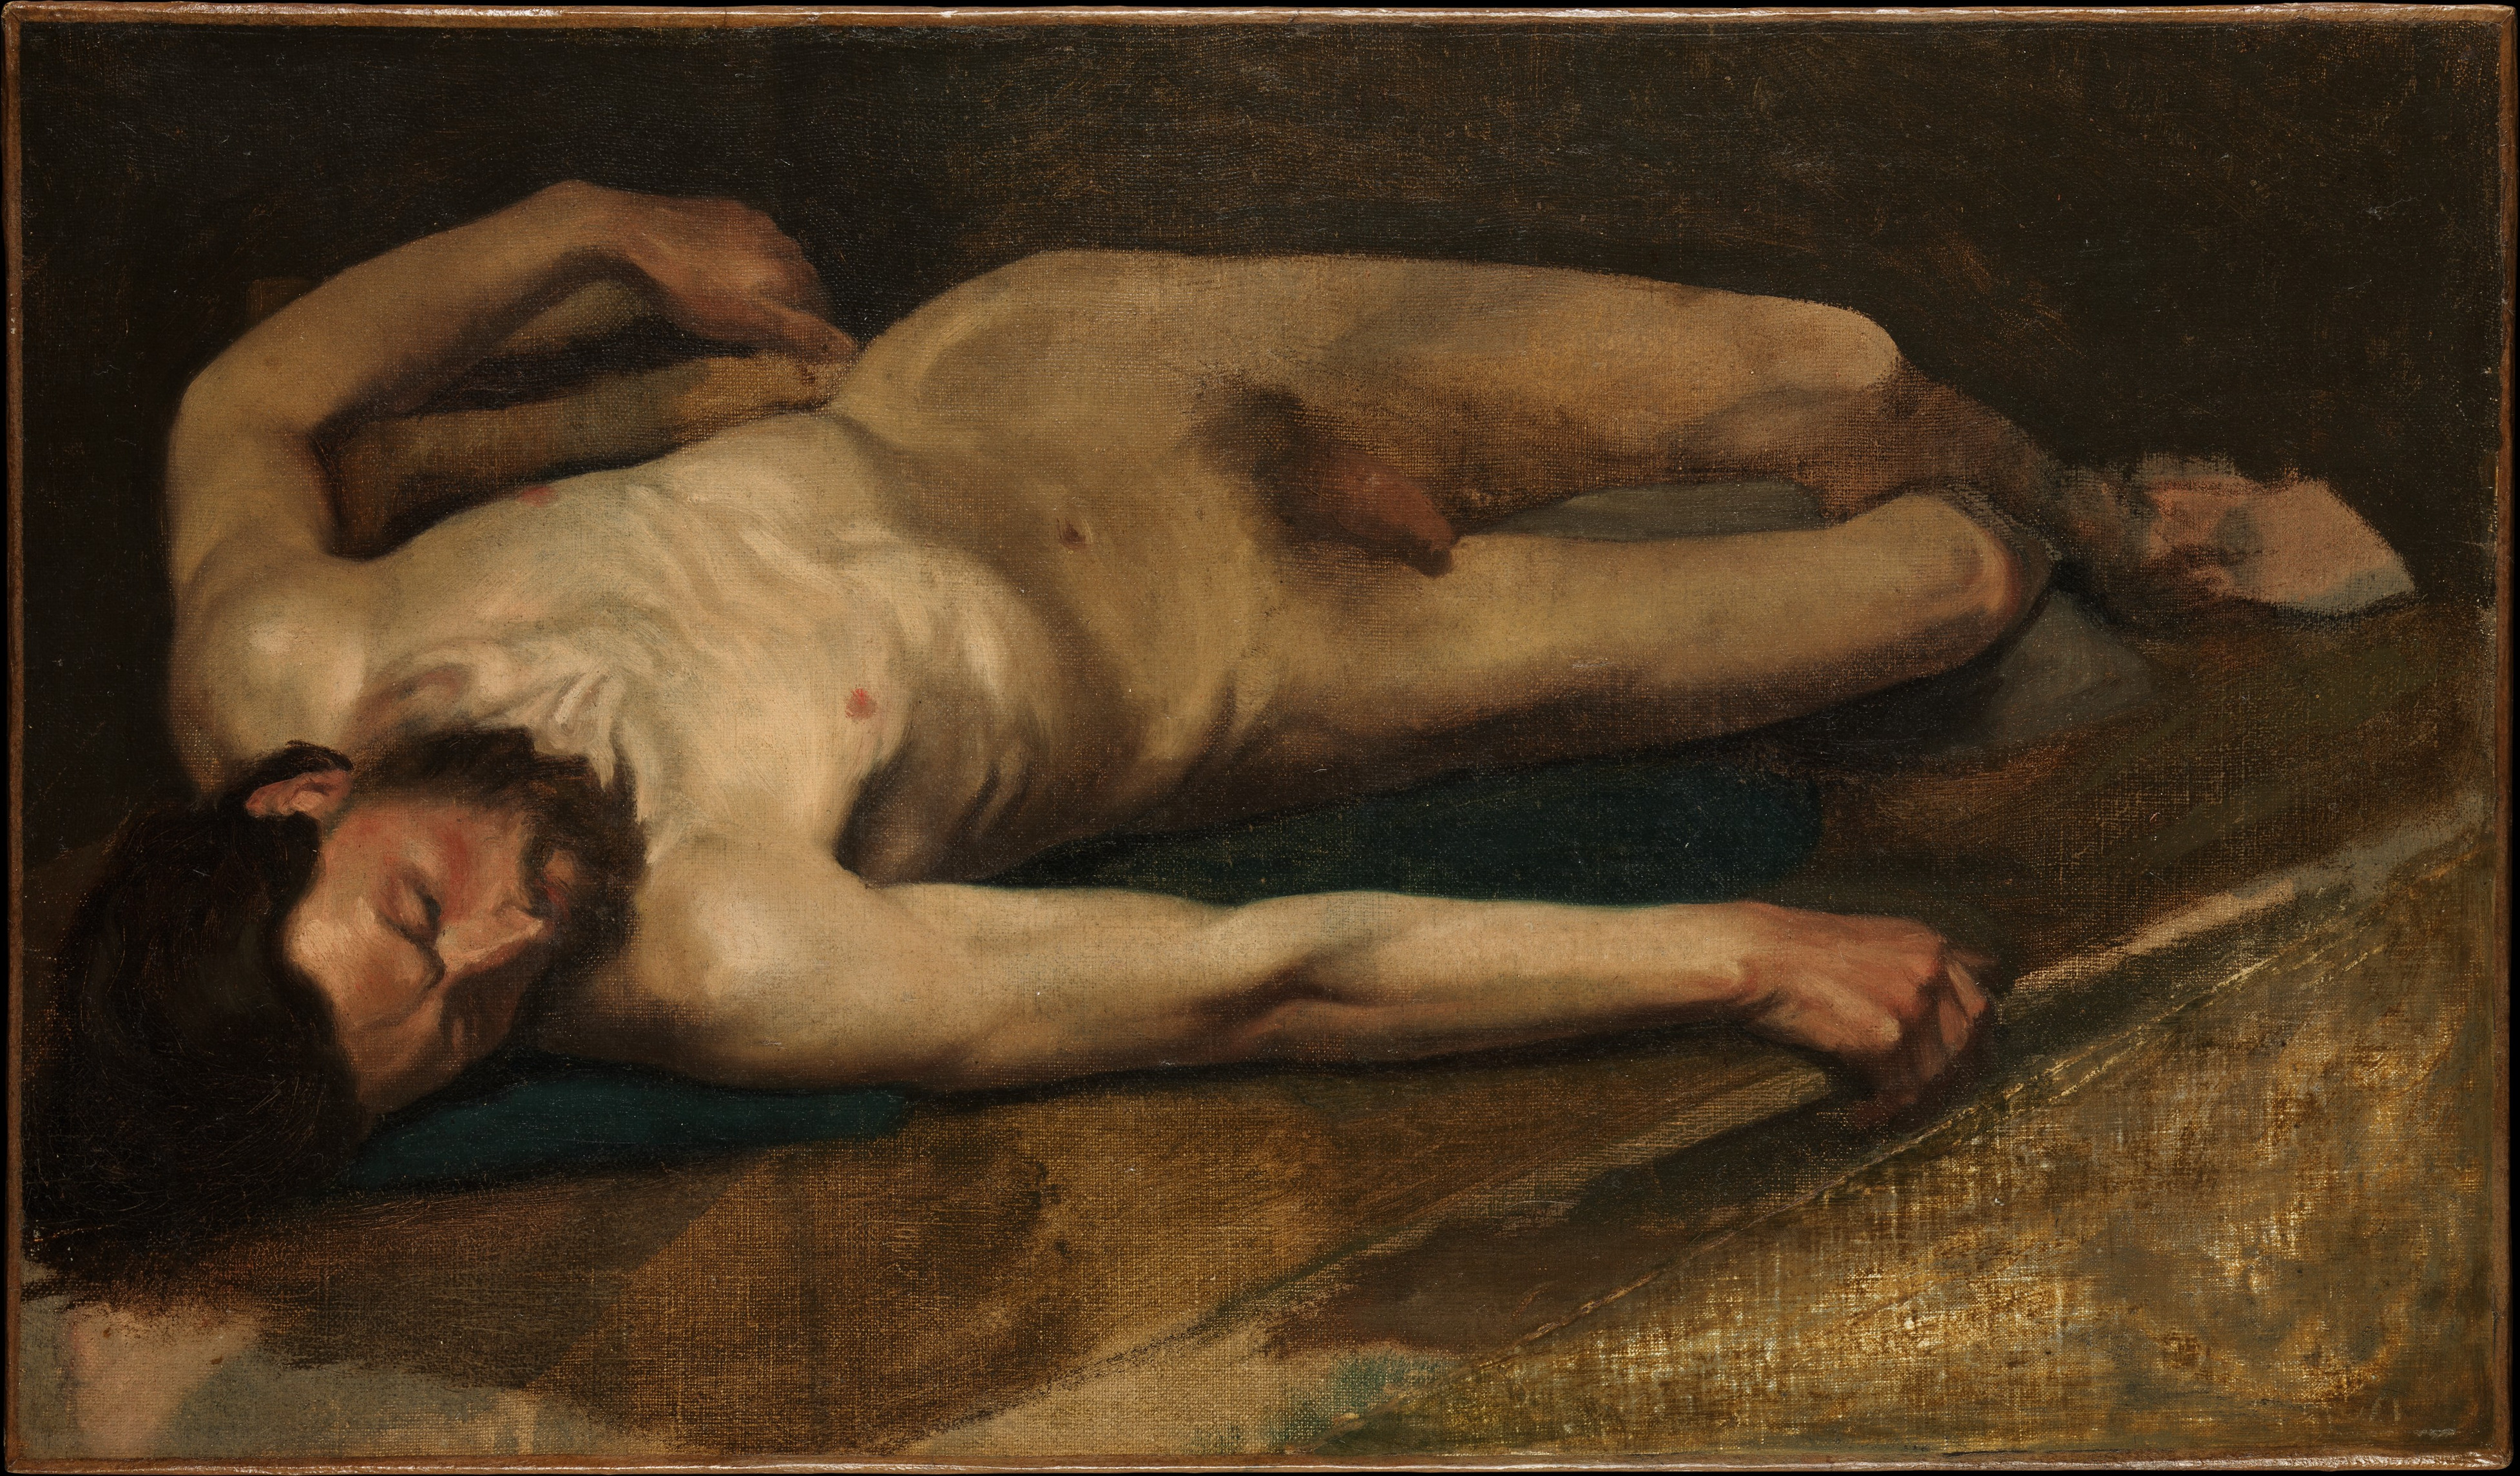 Prison Penpals Paintings Of Naked Men